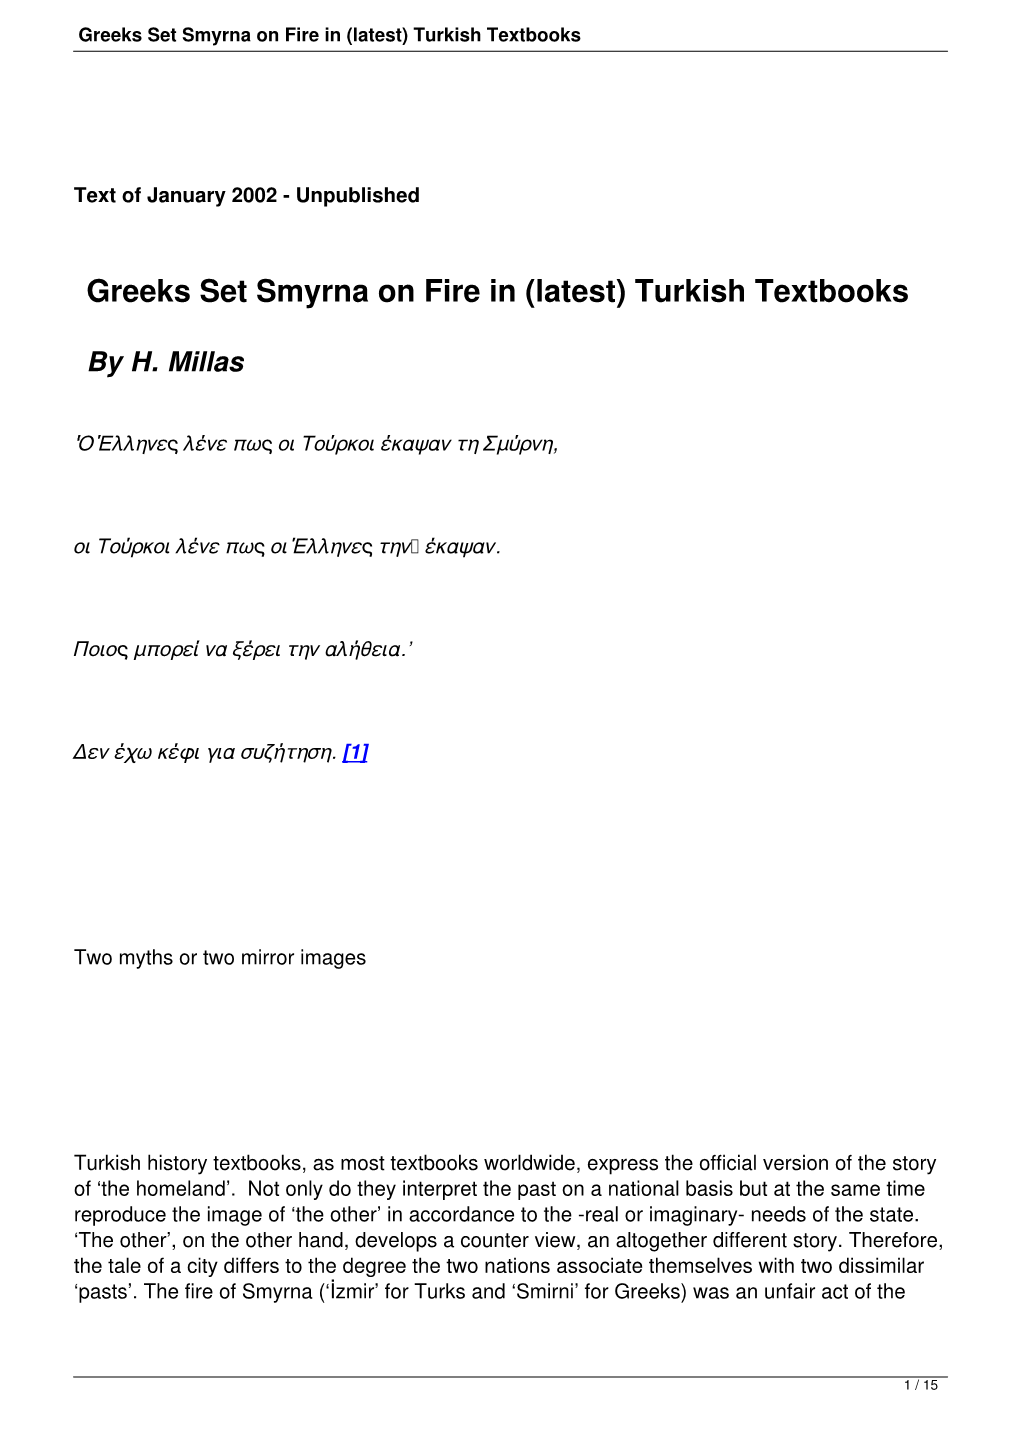 Greeks Set Smyrna on Fire in (Latest) Turkish Textbooks